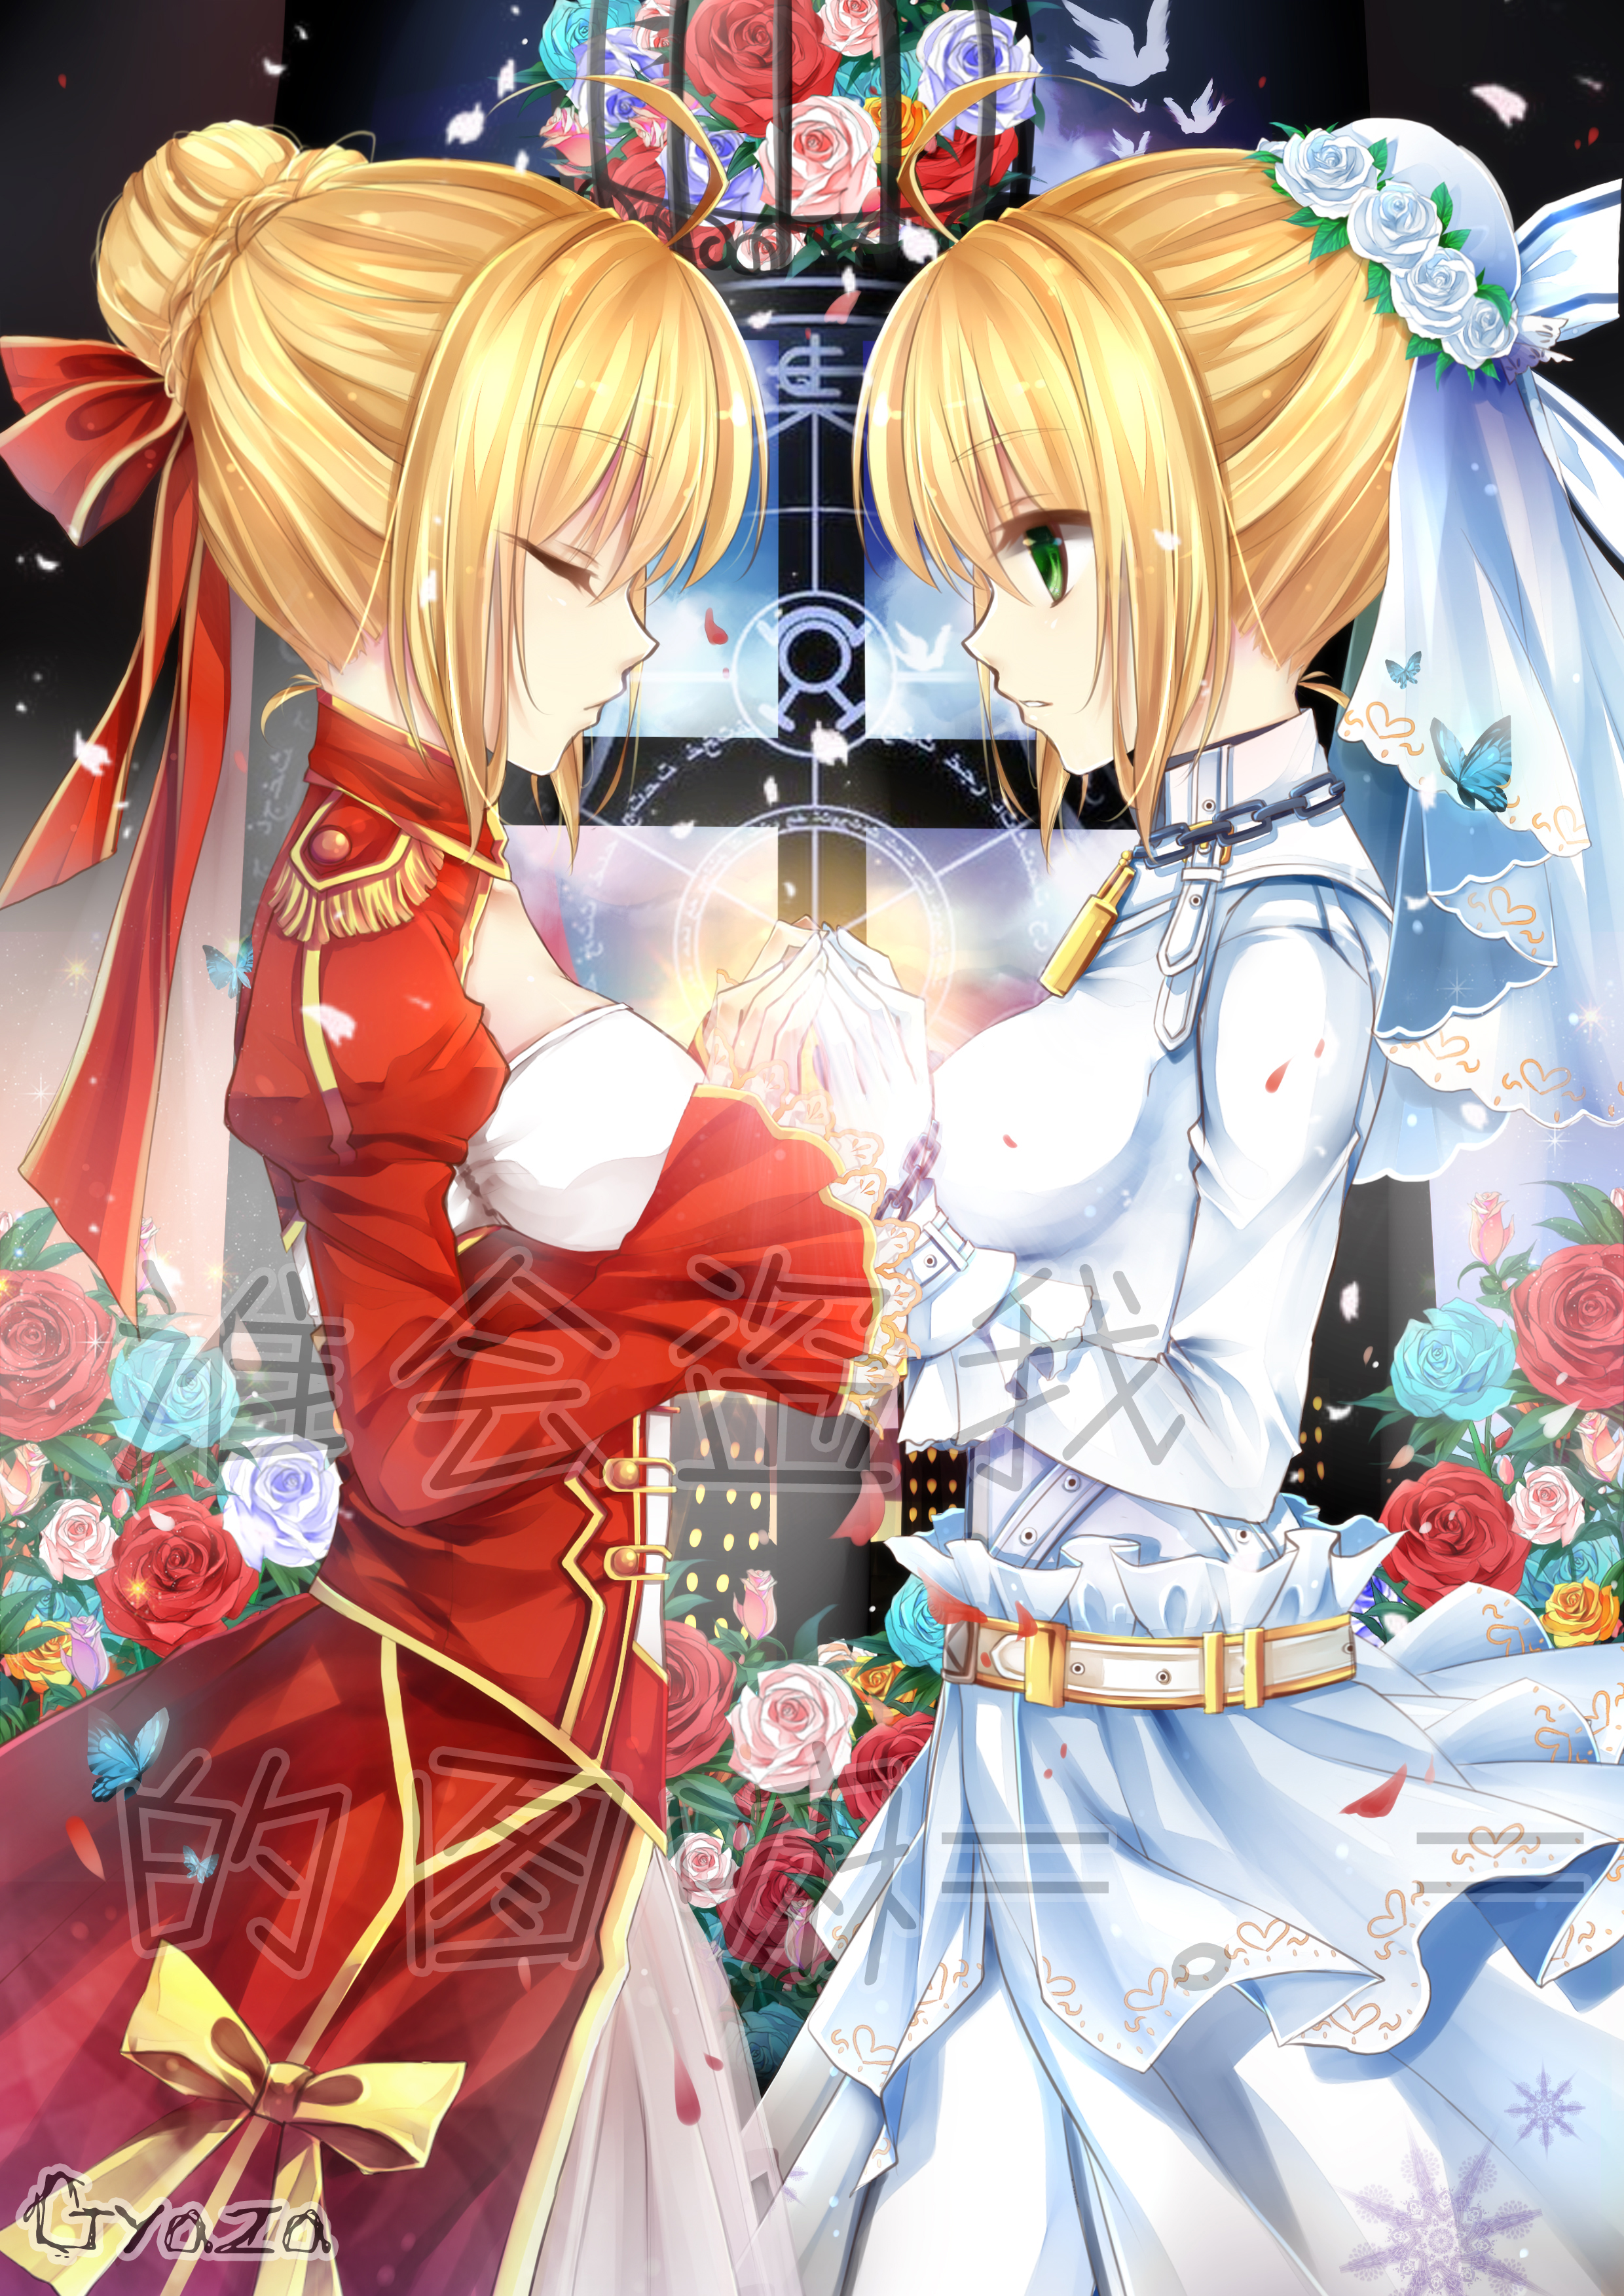 Anime 2480x3507 anime anime girls Fate series Fate/Extra Fate/Extra CCC Fate/Grand Order Nero Claudius Saber Bride long hair blonde two women artwork digital art fan art